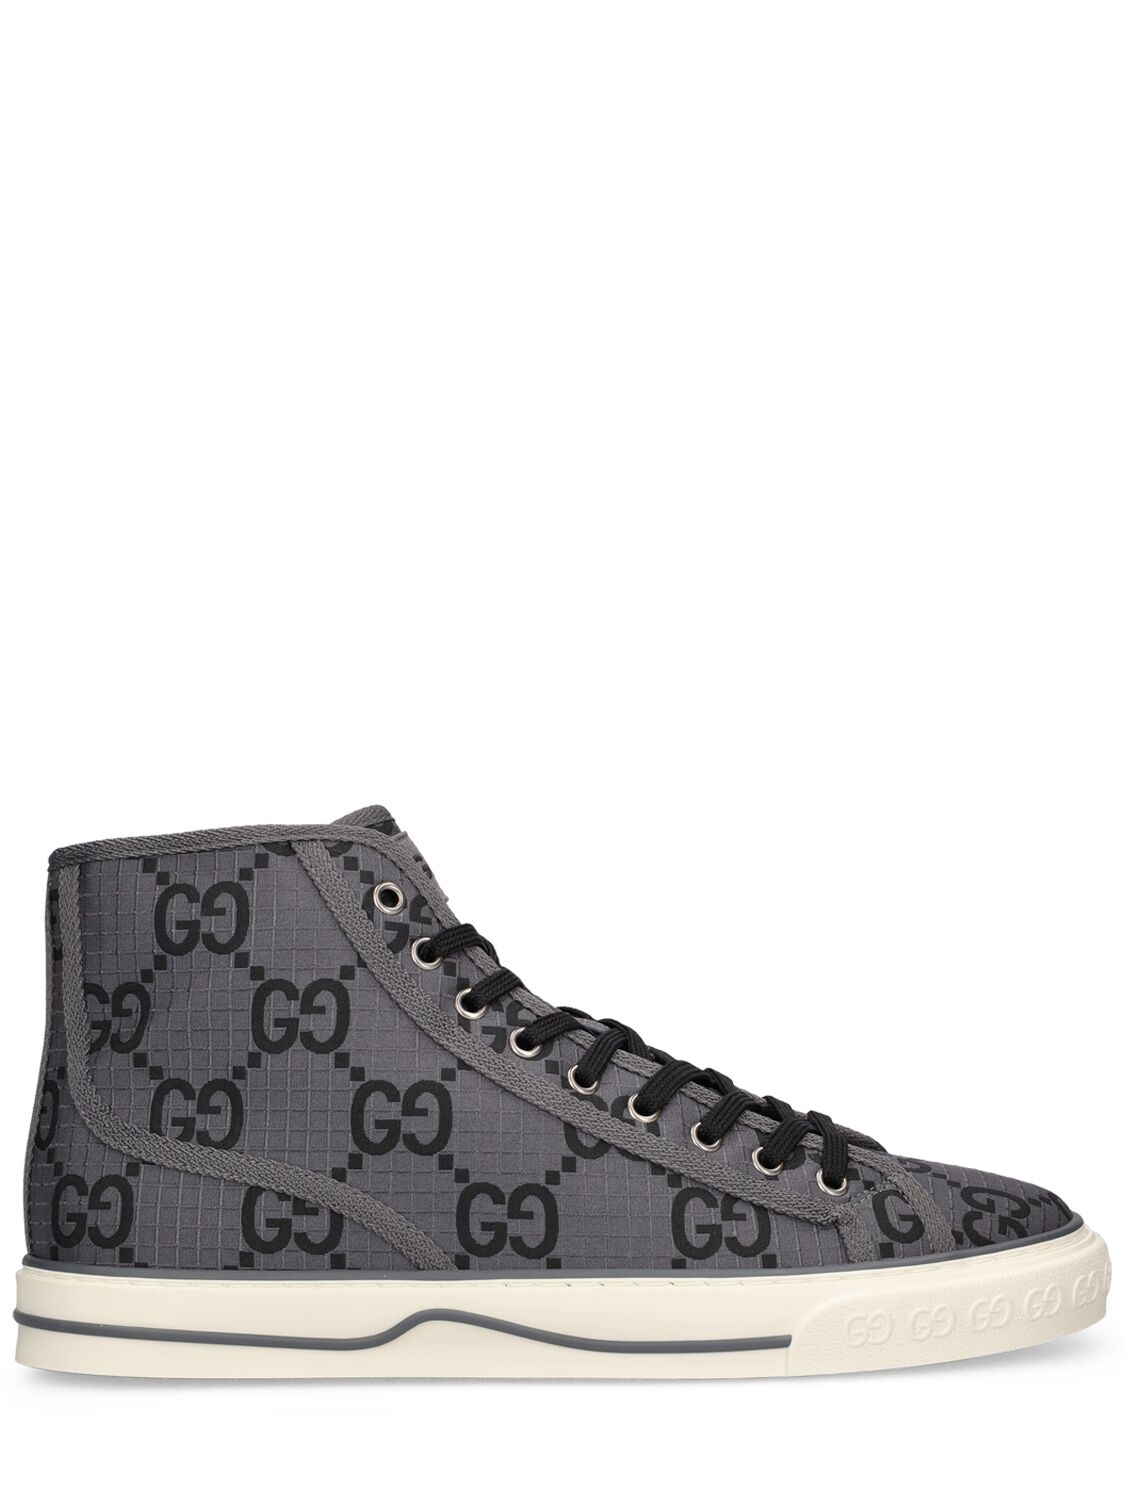 Gucci Gg Tennis Ripstop Tech Sneakers In Black,grey